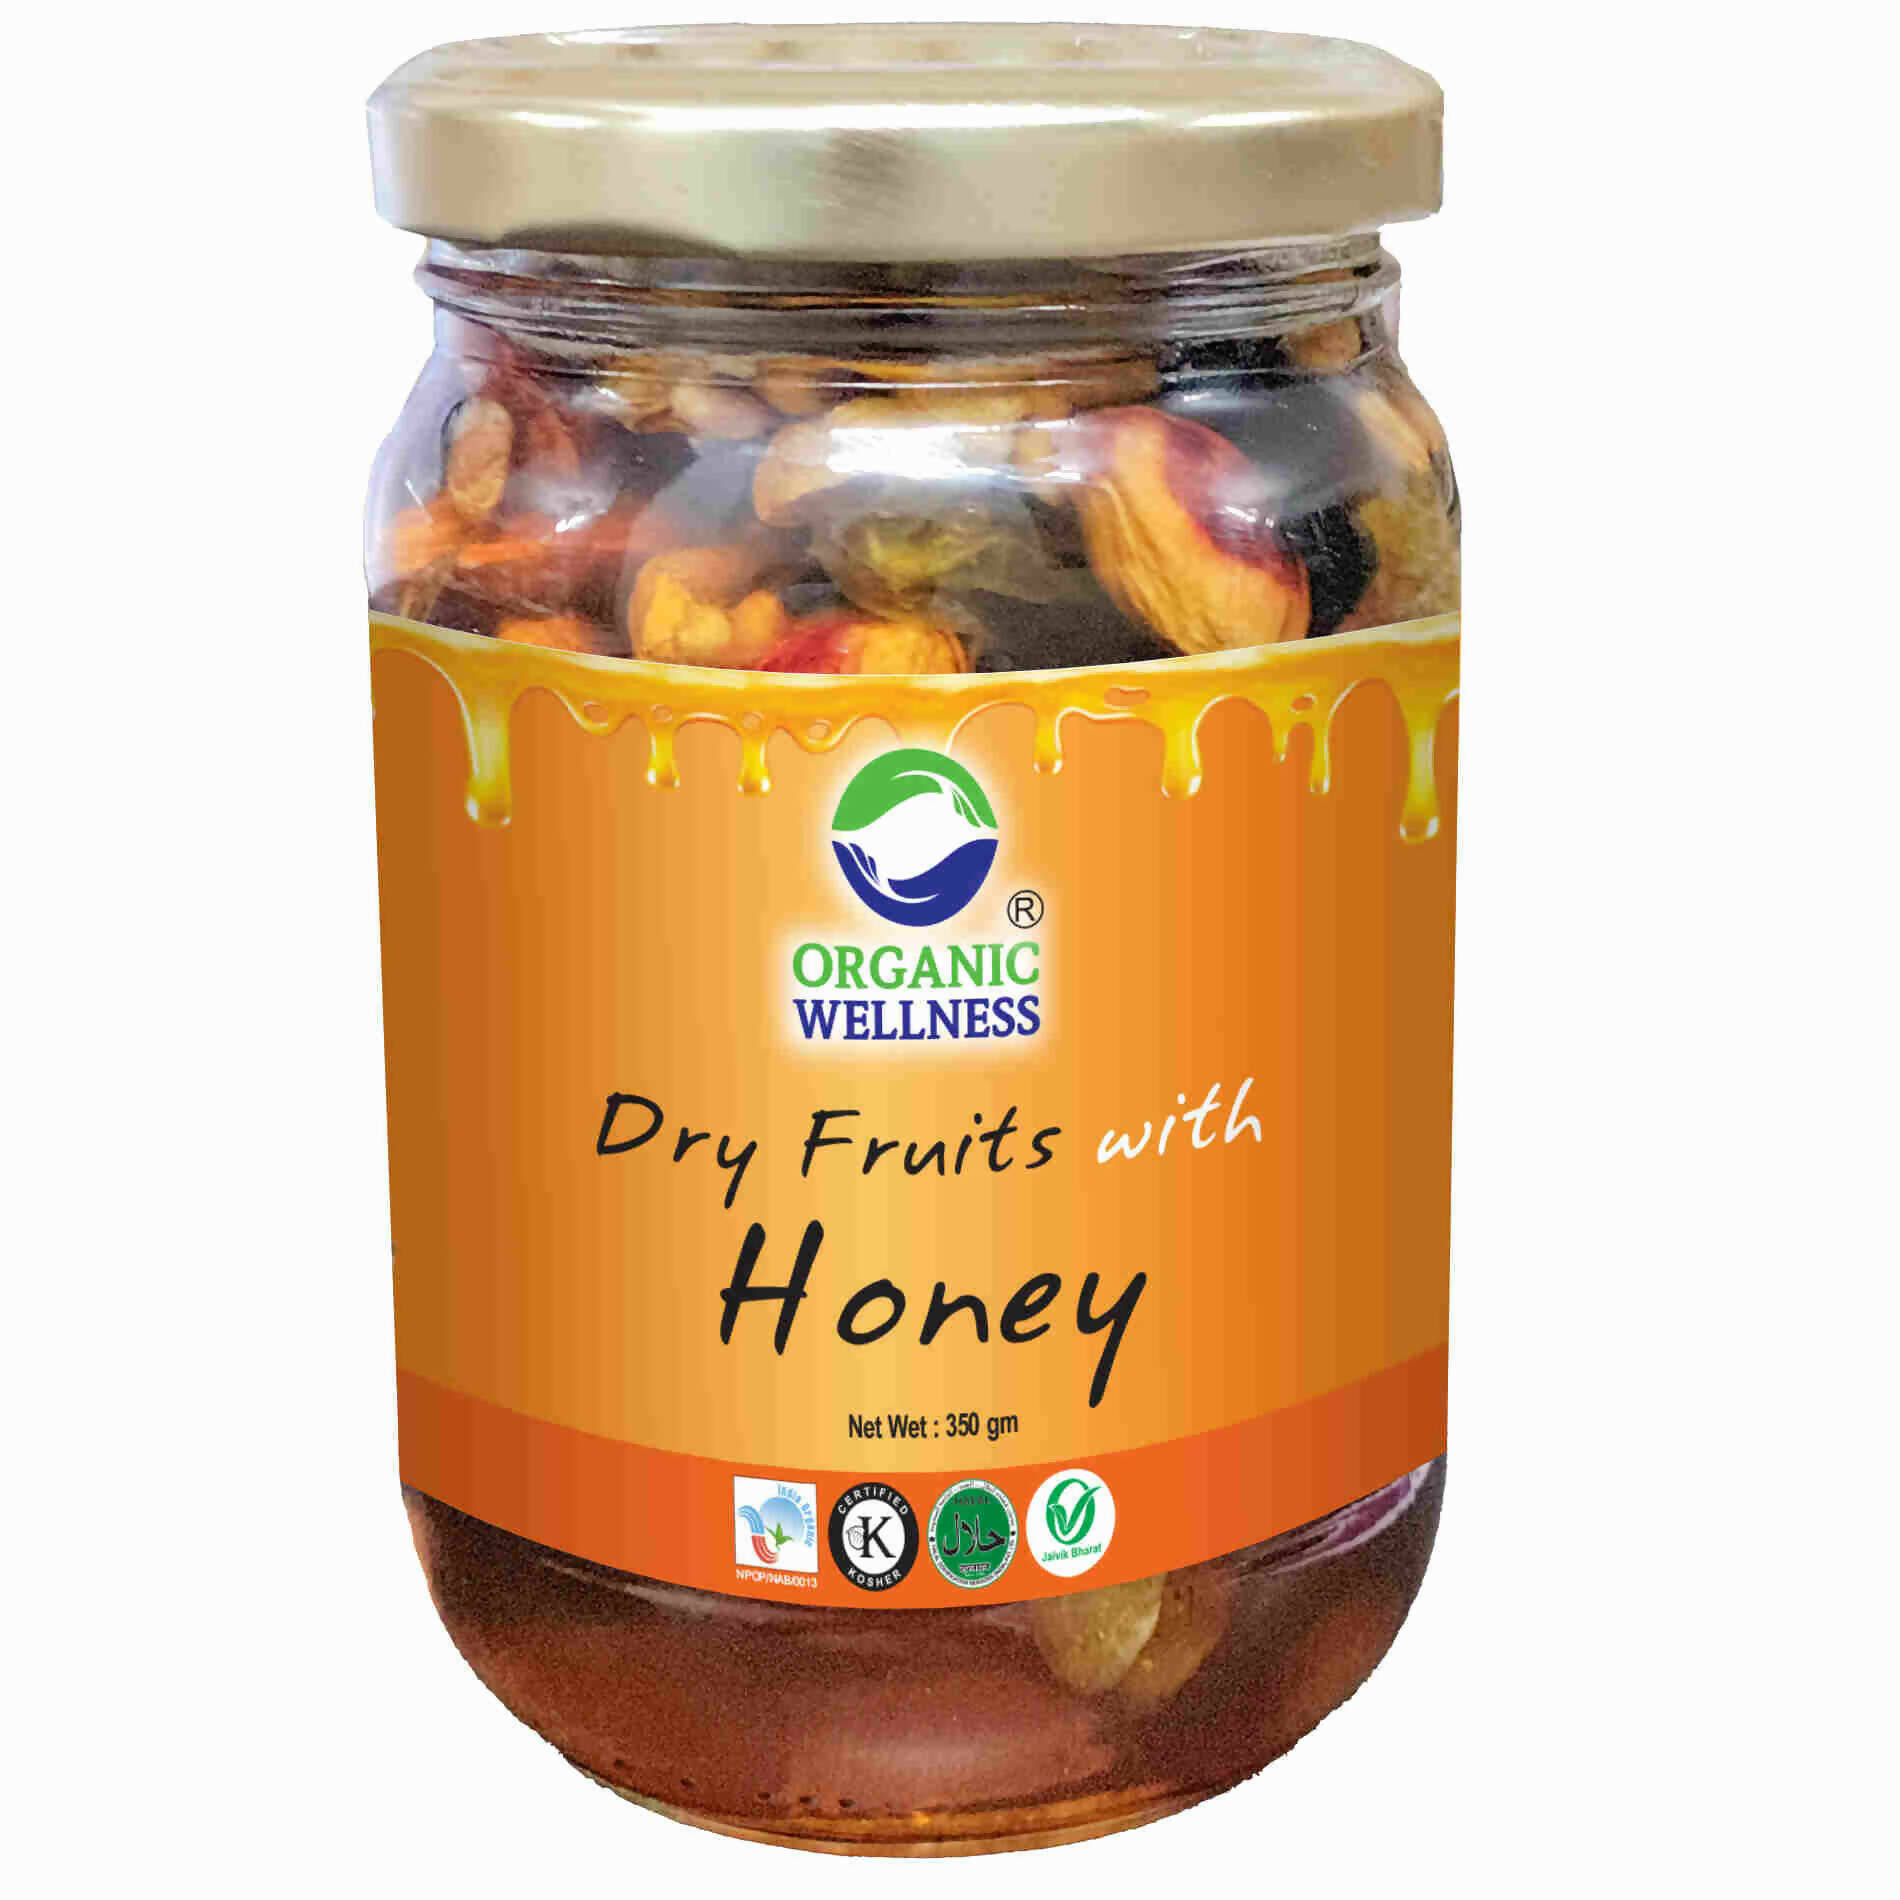 Organic Wellness Dry Fruits with Honey - BUDNE